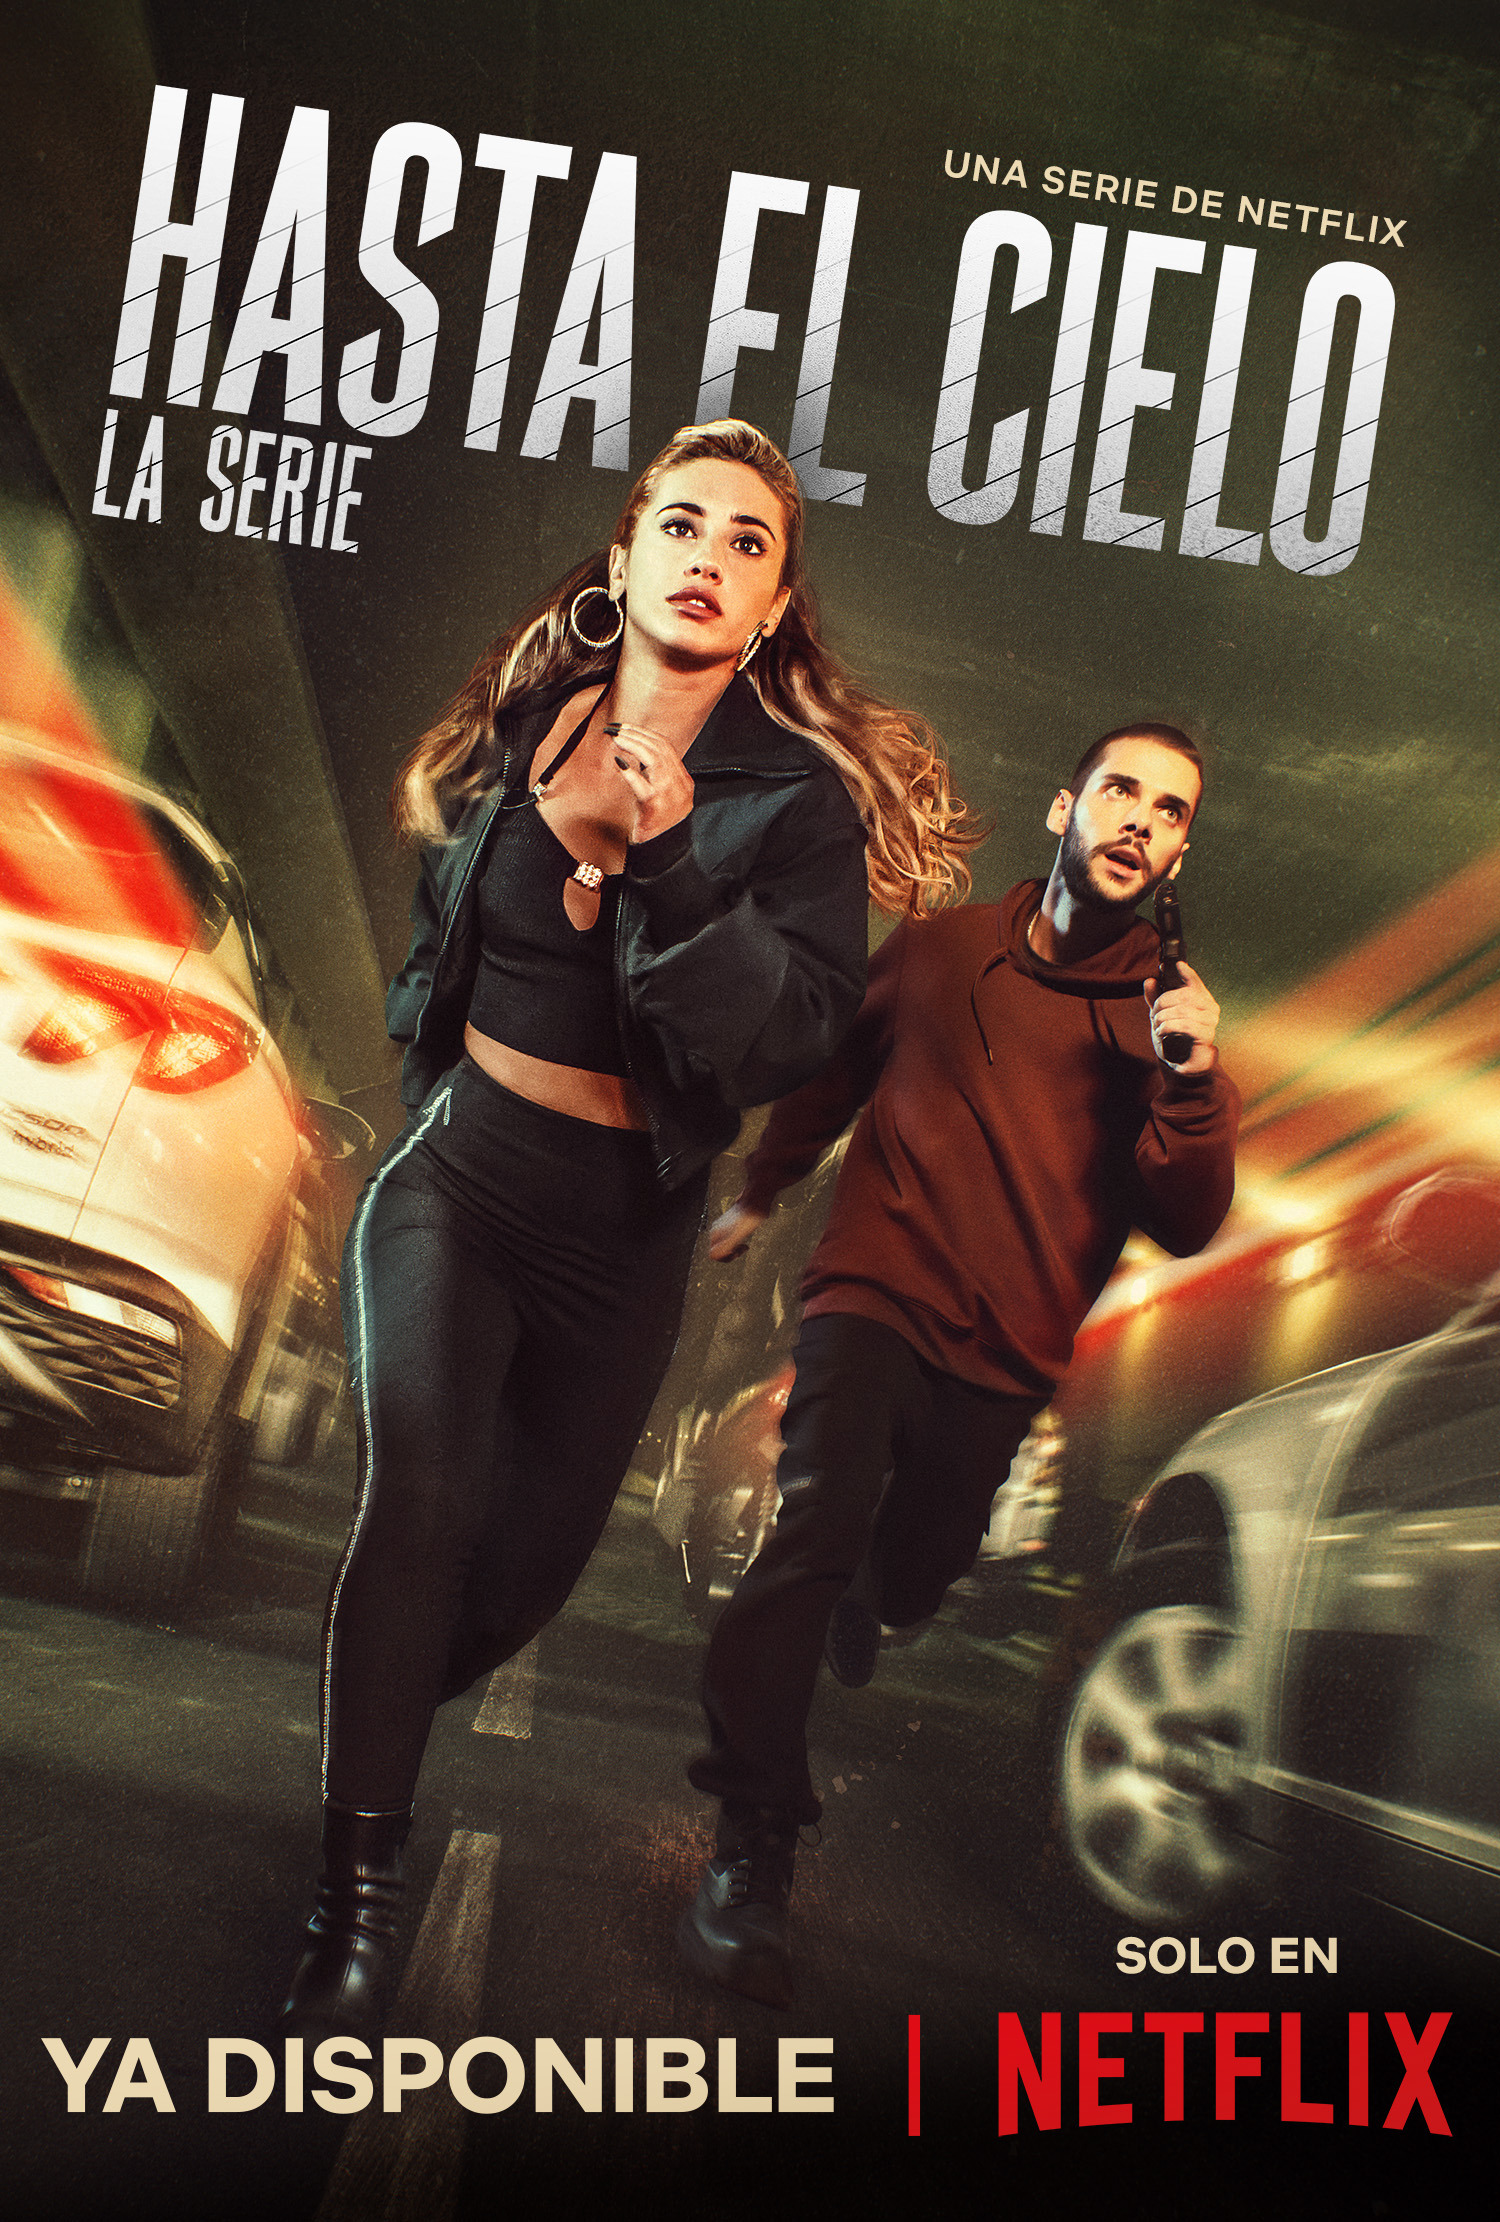 Mega Sized TV Poster Image for Hasta el cielo: La serie (#6 of 7)